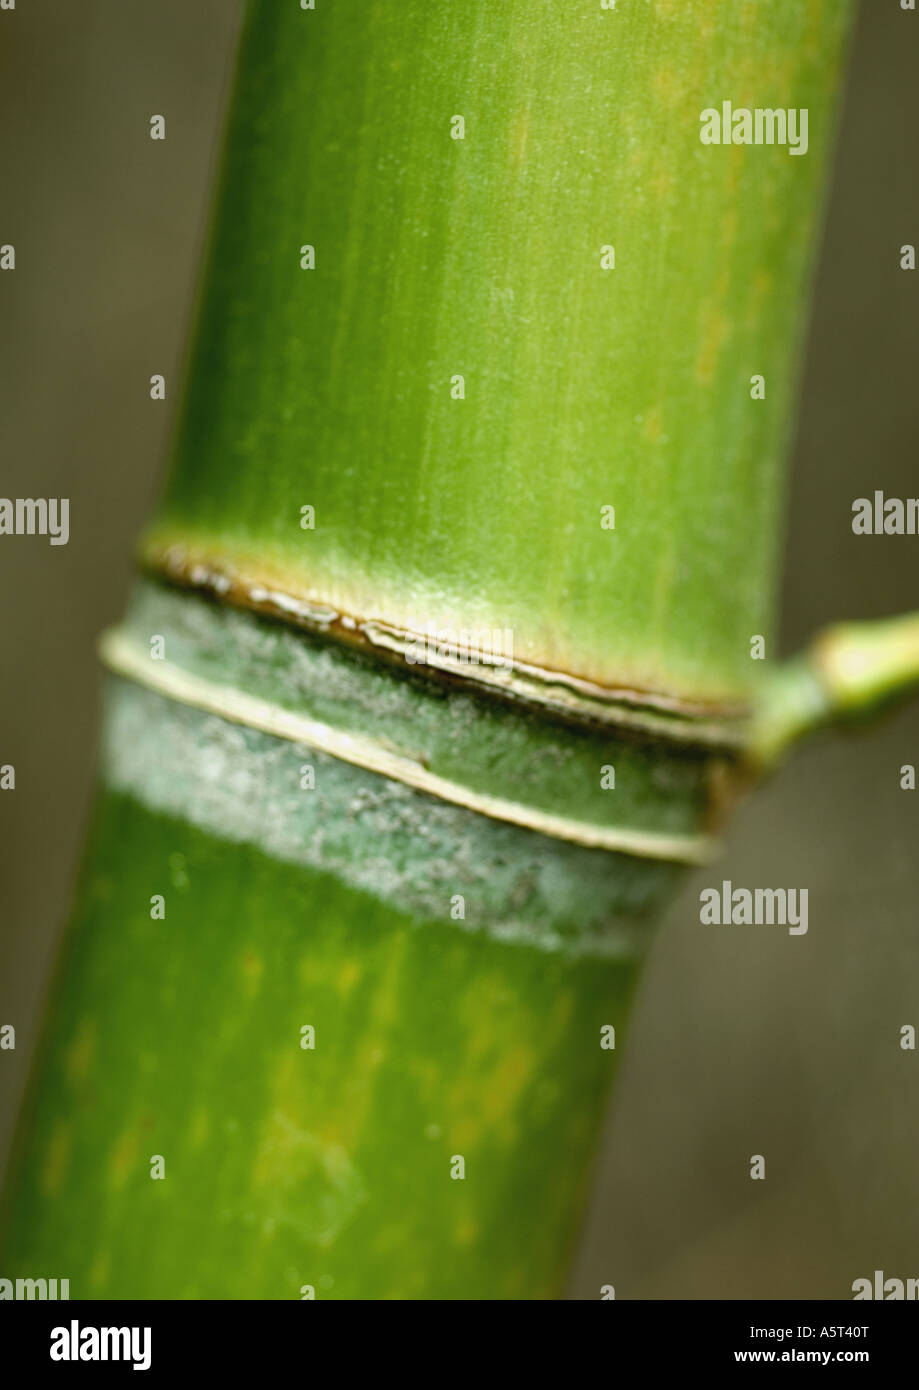 Bamboo stalk, extreme close-up Stock Photo